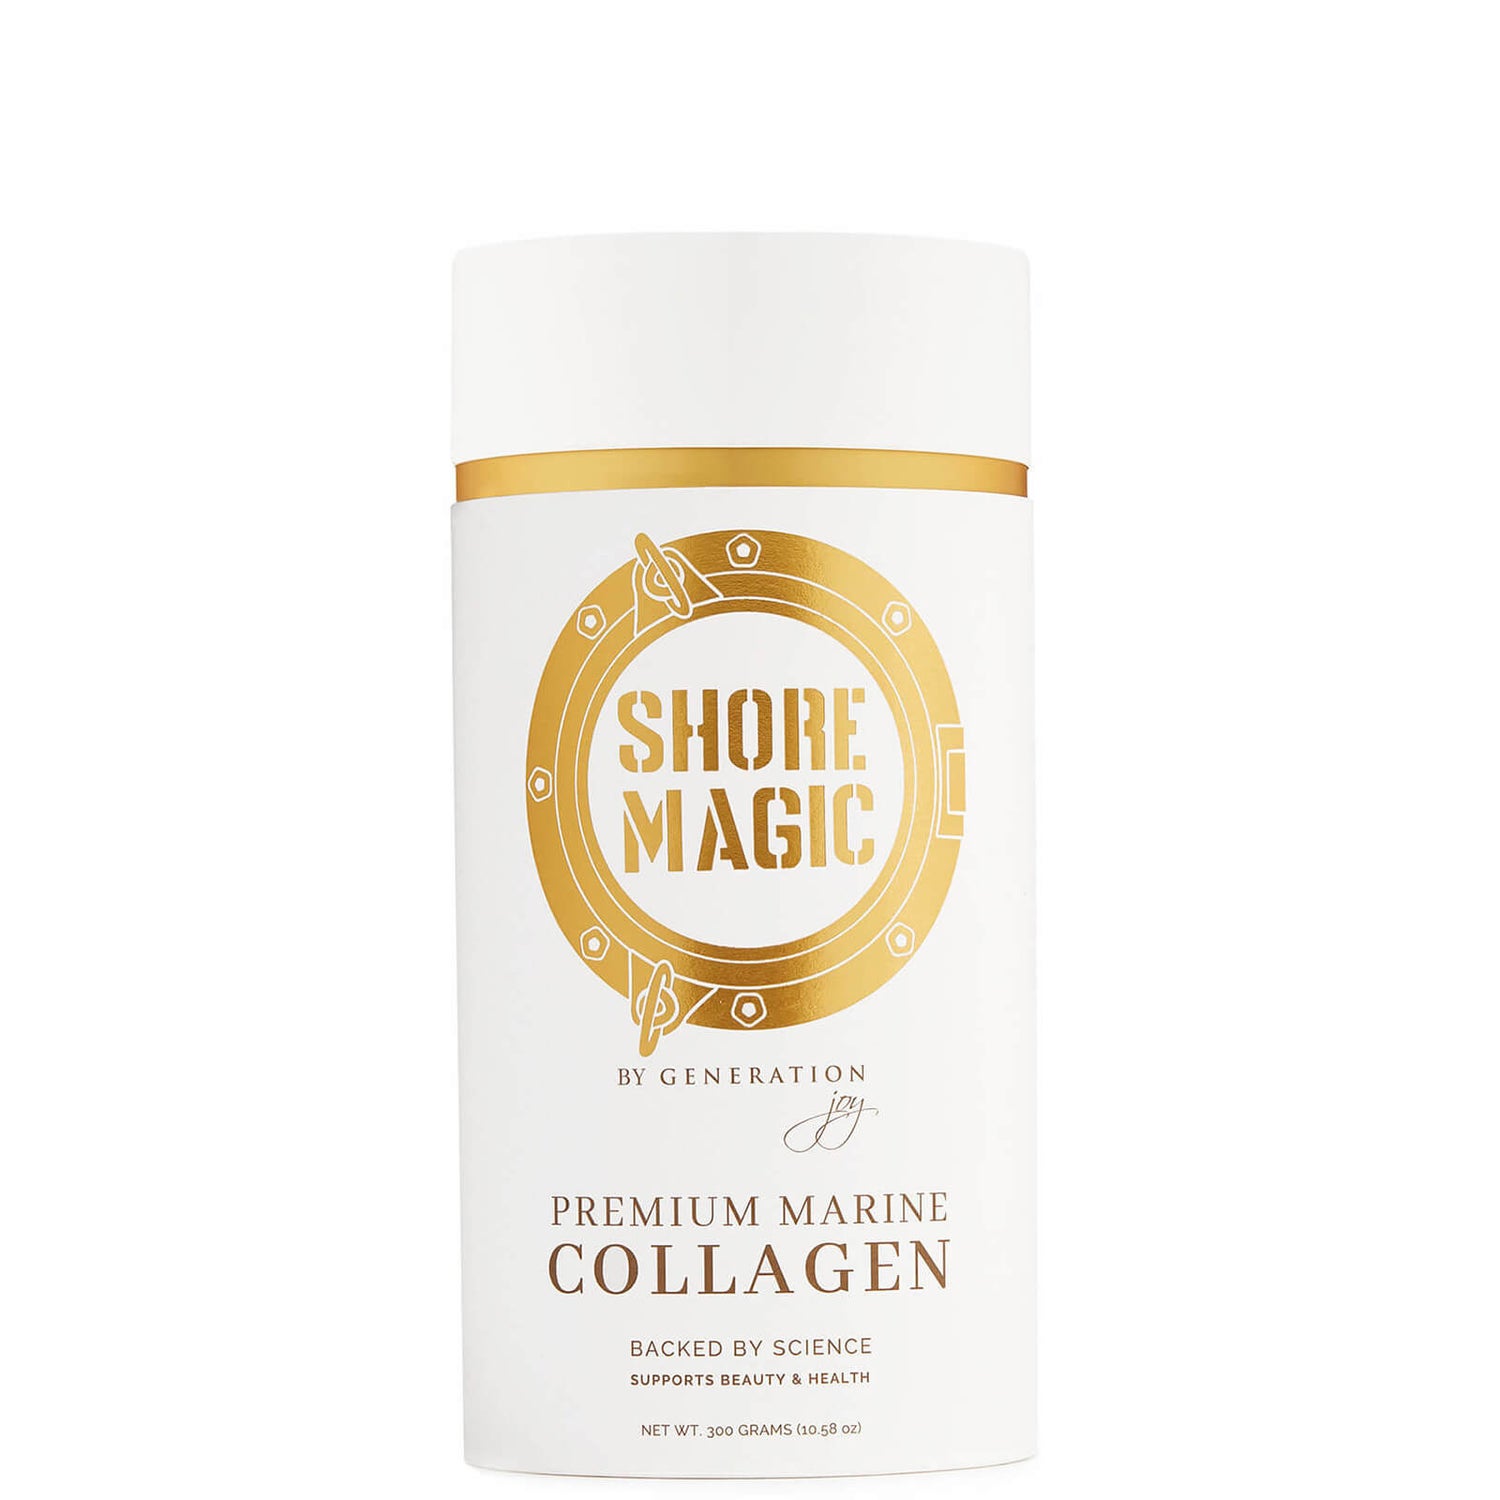 Shore Magic Collagen Powder - 30 Day Supply